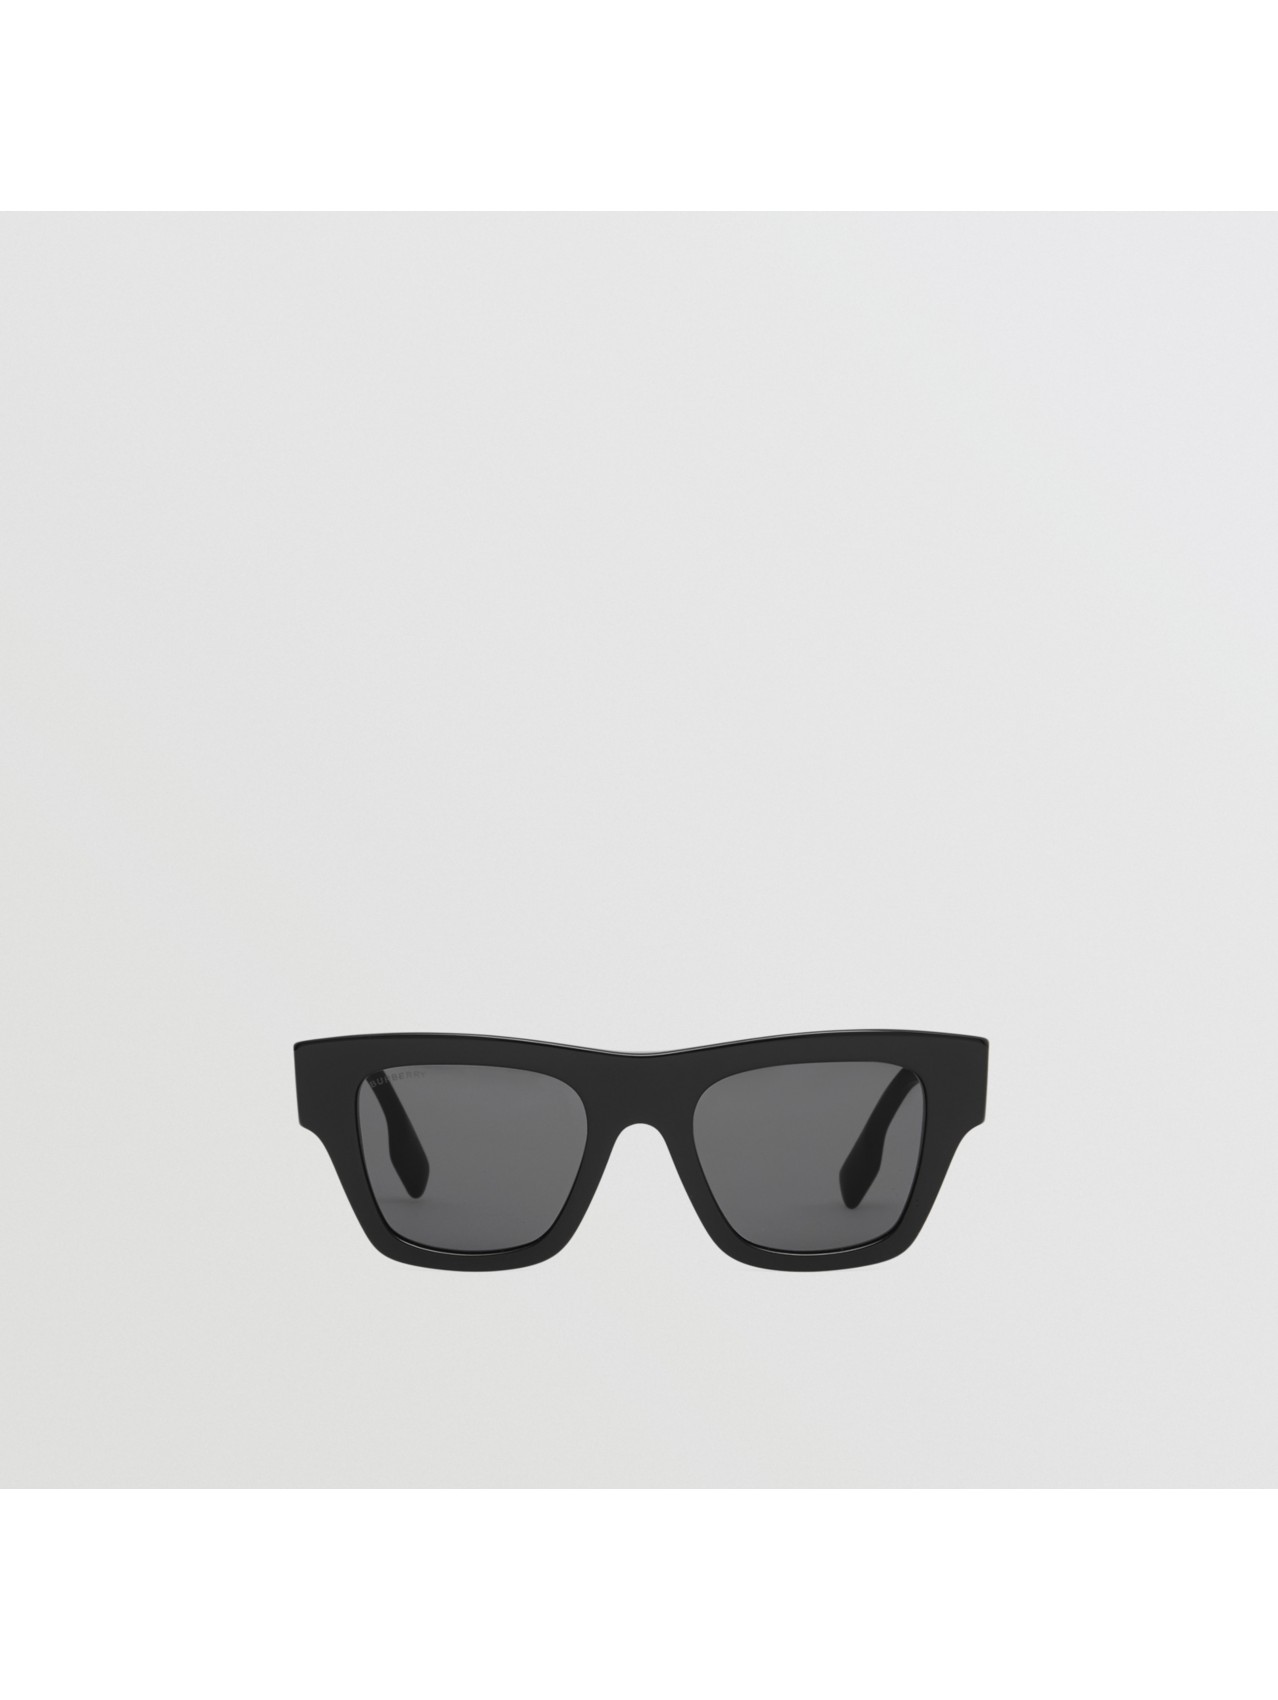 Men's Designer Eyewear | Opticals & Sunglasses | Burberry® Official